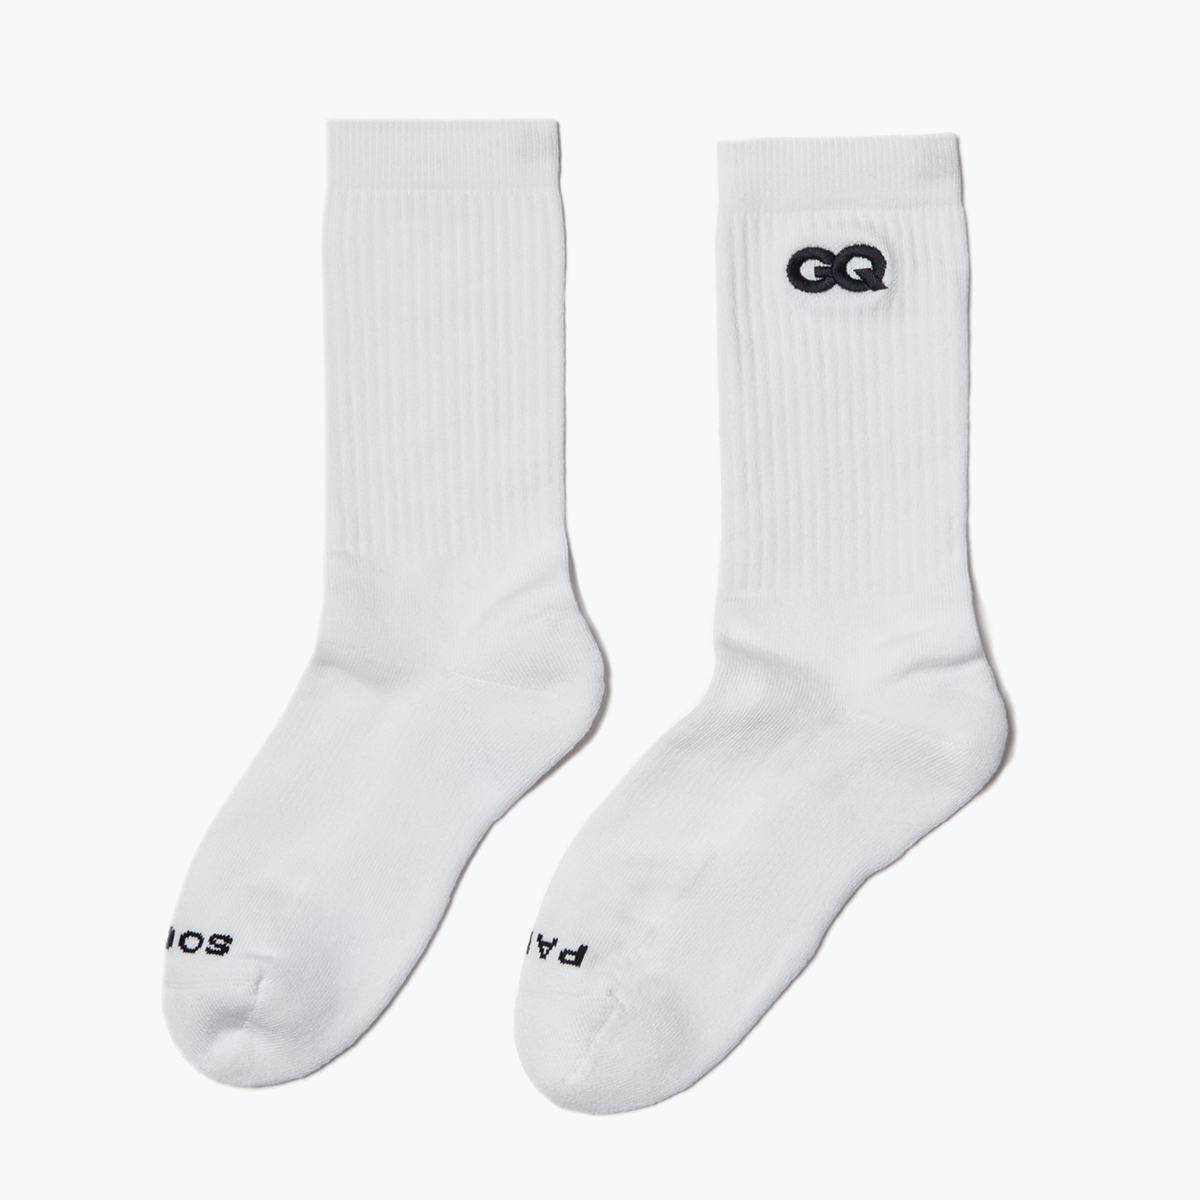 GQ Party-Socken, Weiß Gr. L